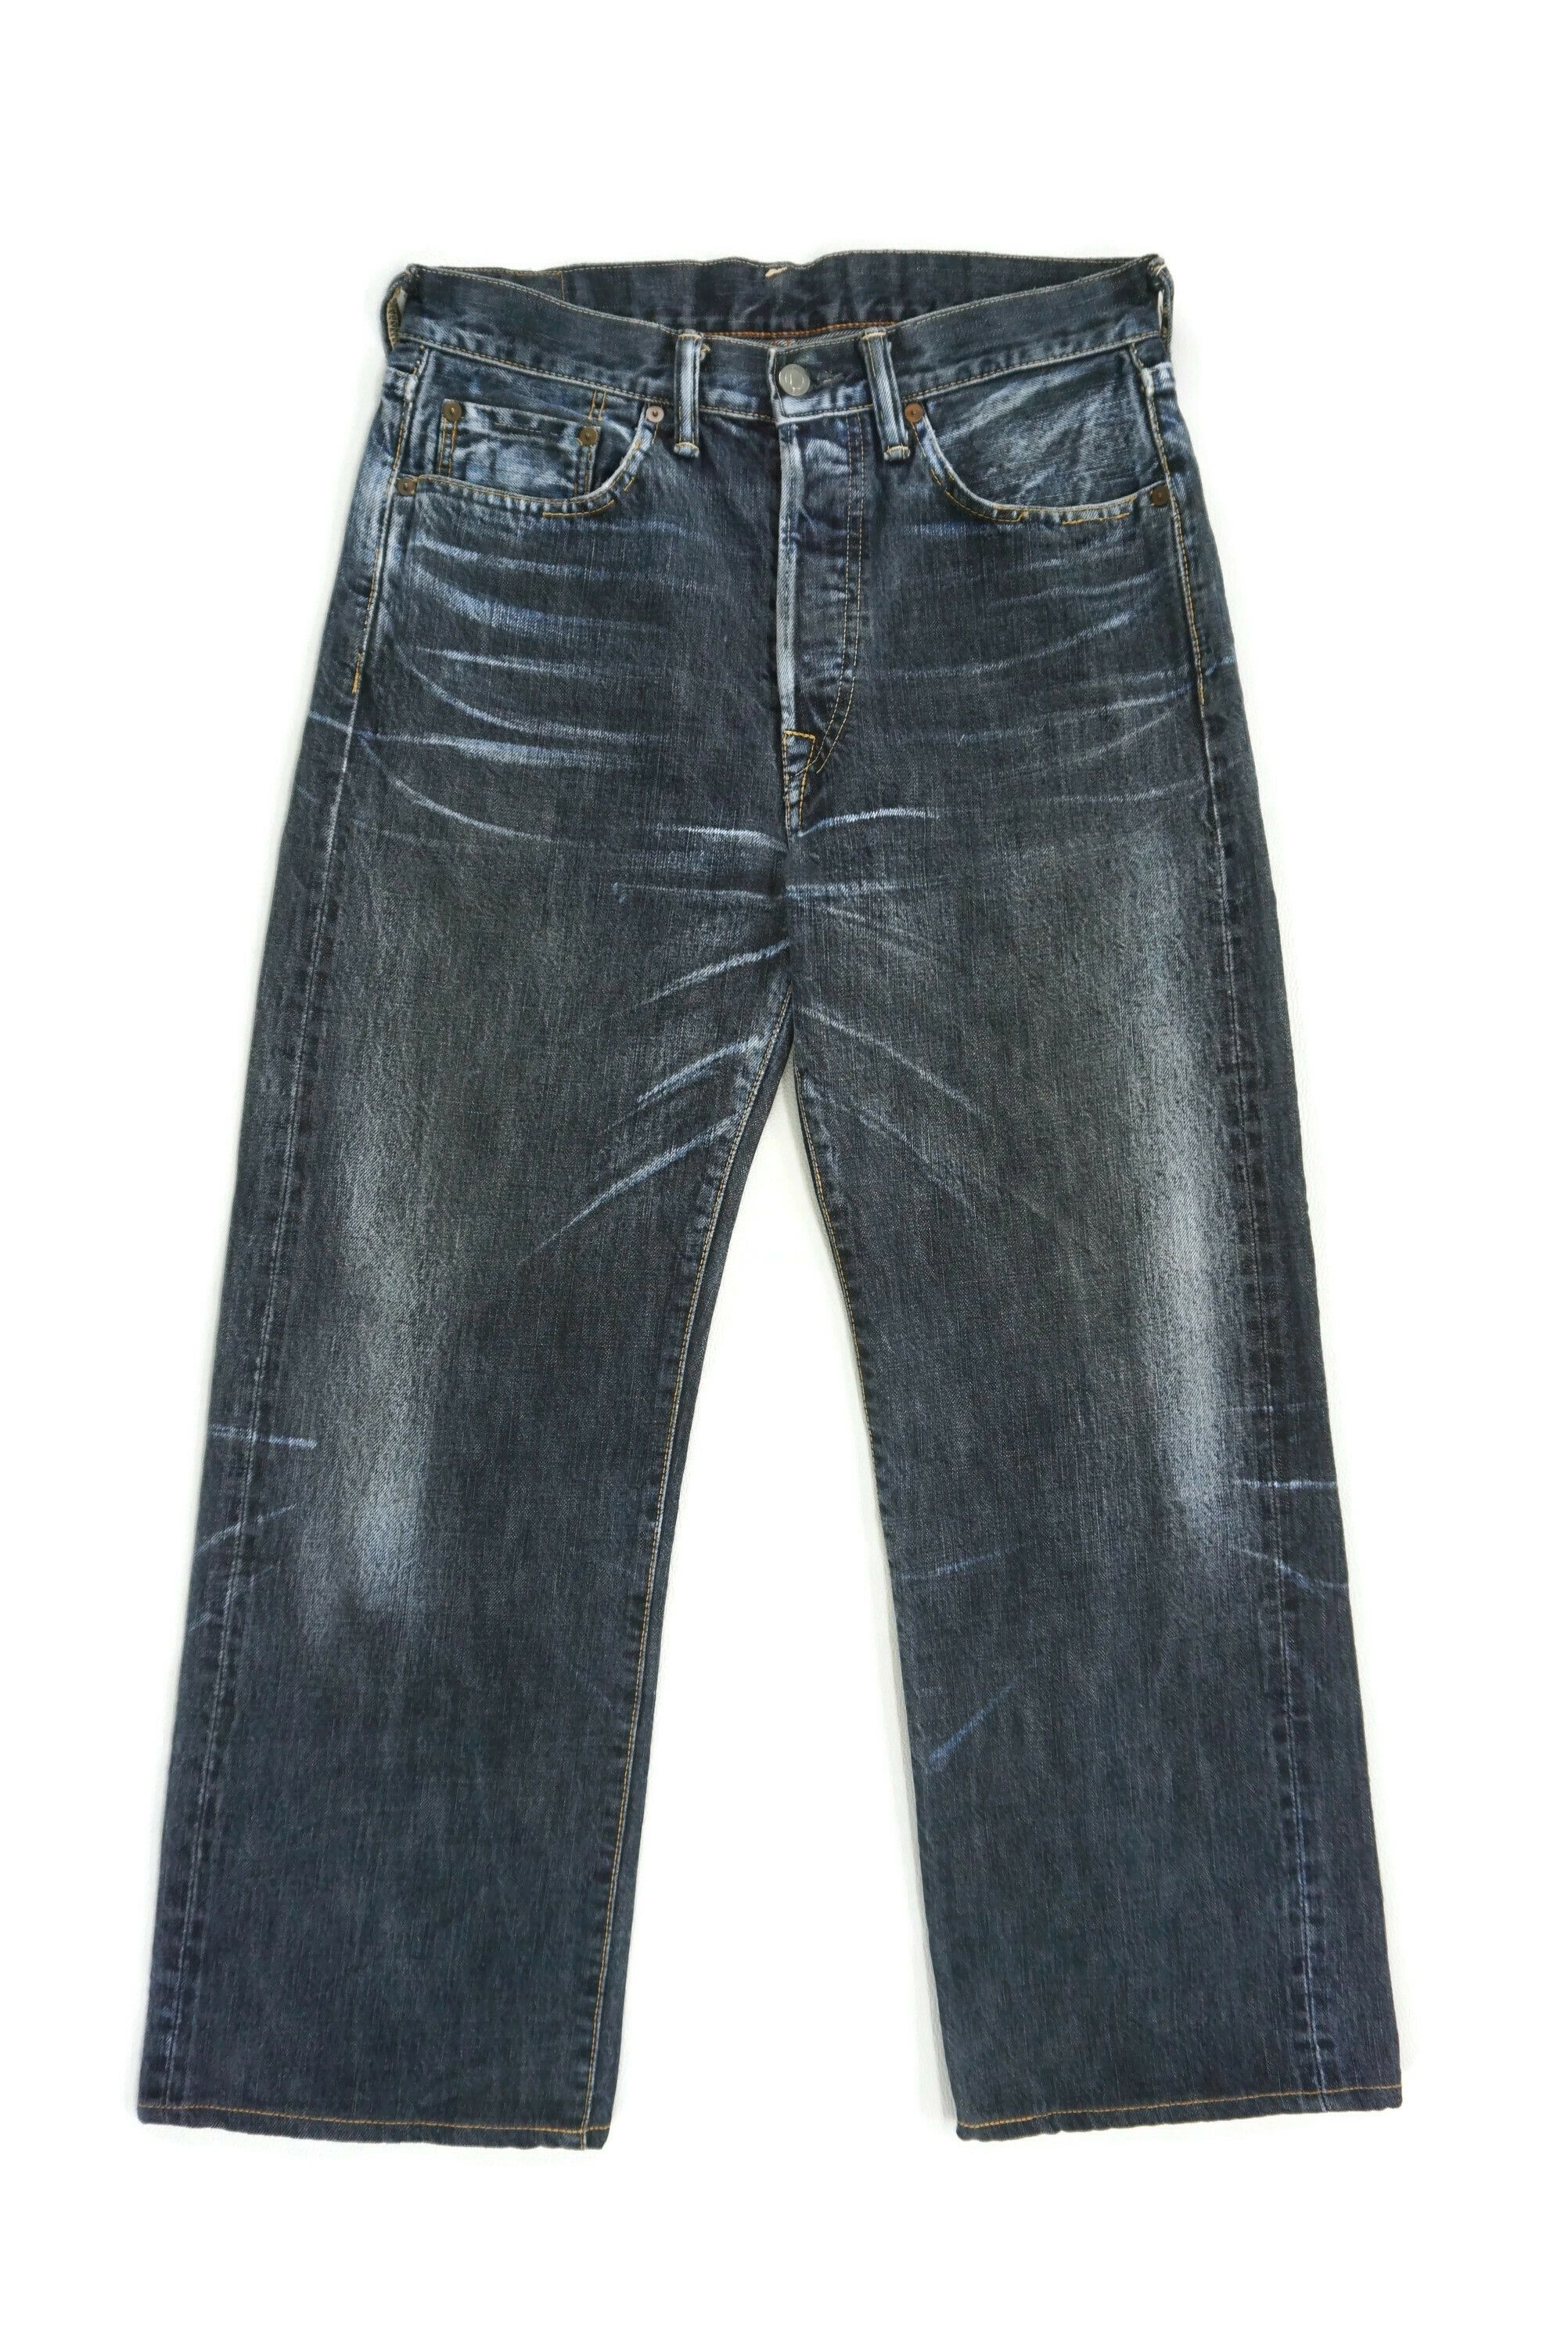 45rpm R by 45 Rpm Selvedge Denim Jeans Indigo Dyed Redline | Grailed